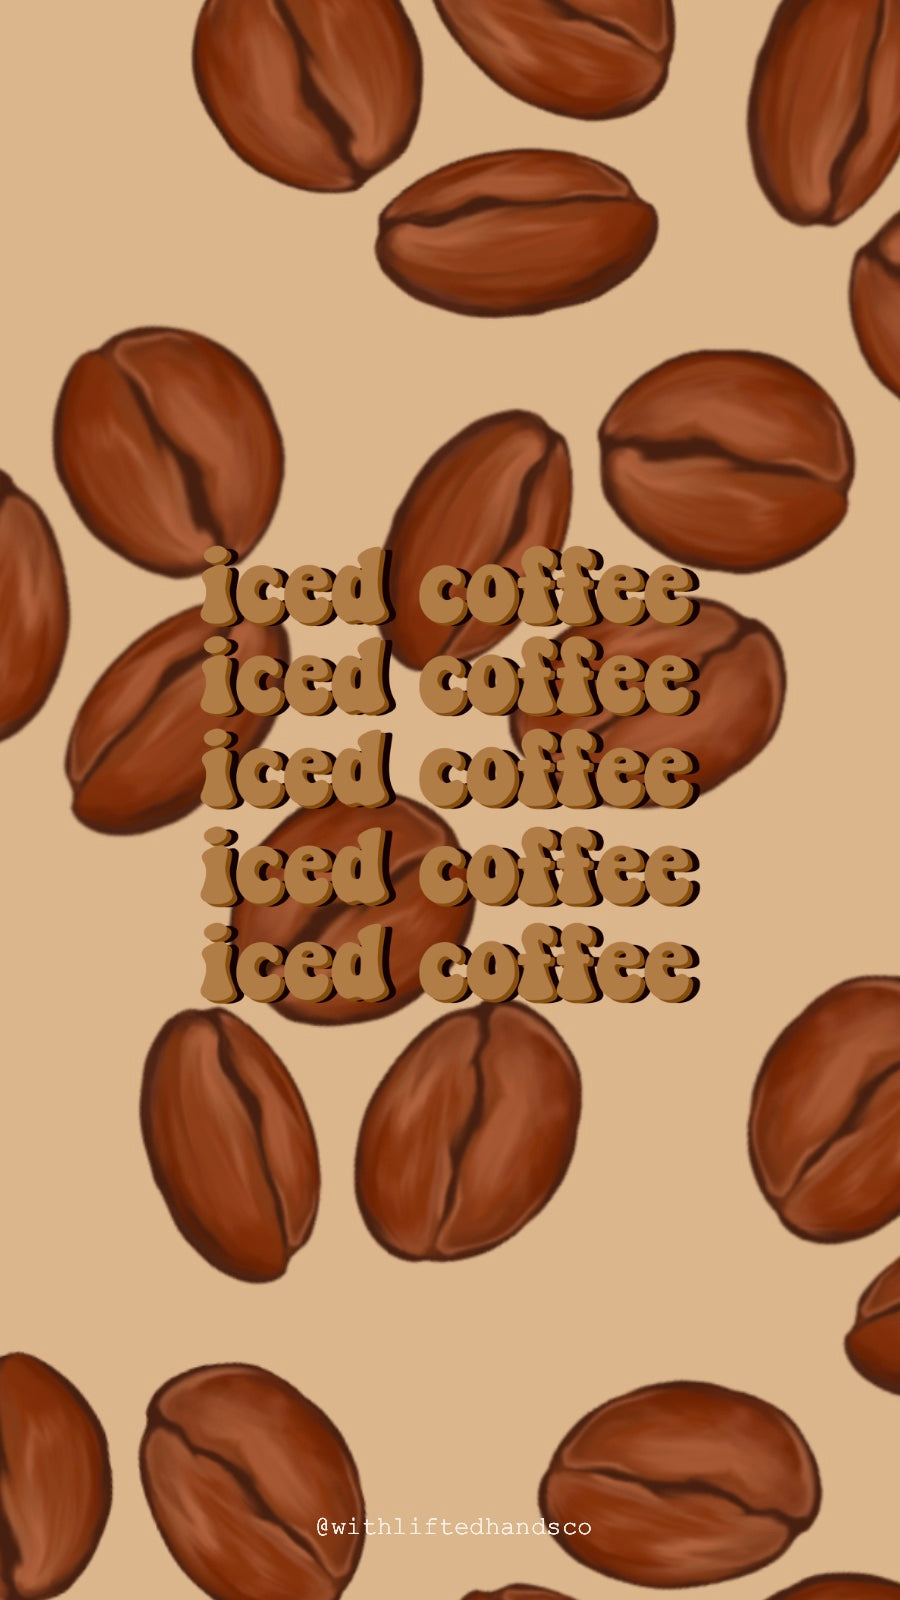 Iced Coffee Bean Illustration Phone Wallpaper